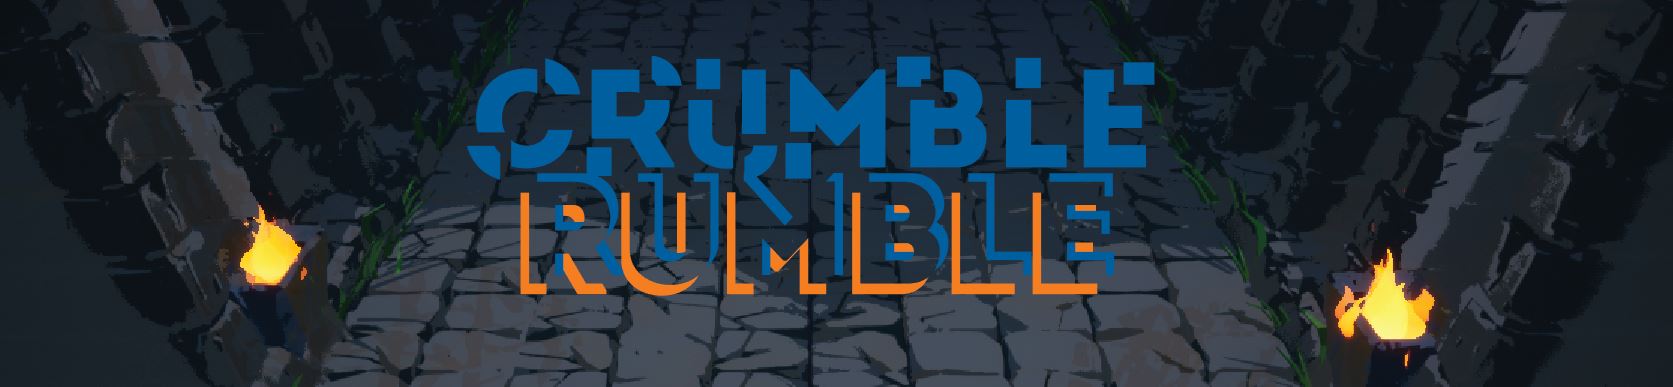 [Group11]CrumbleRumble